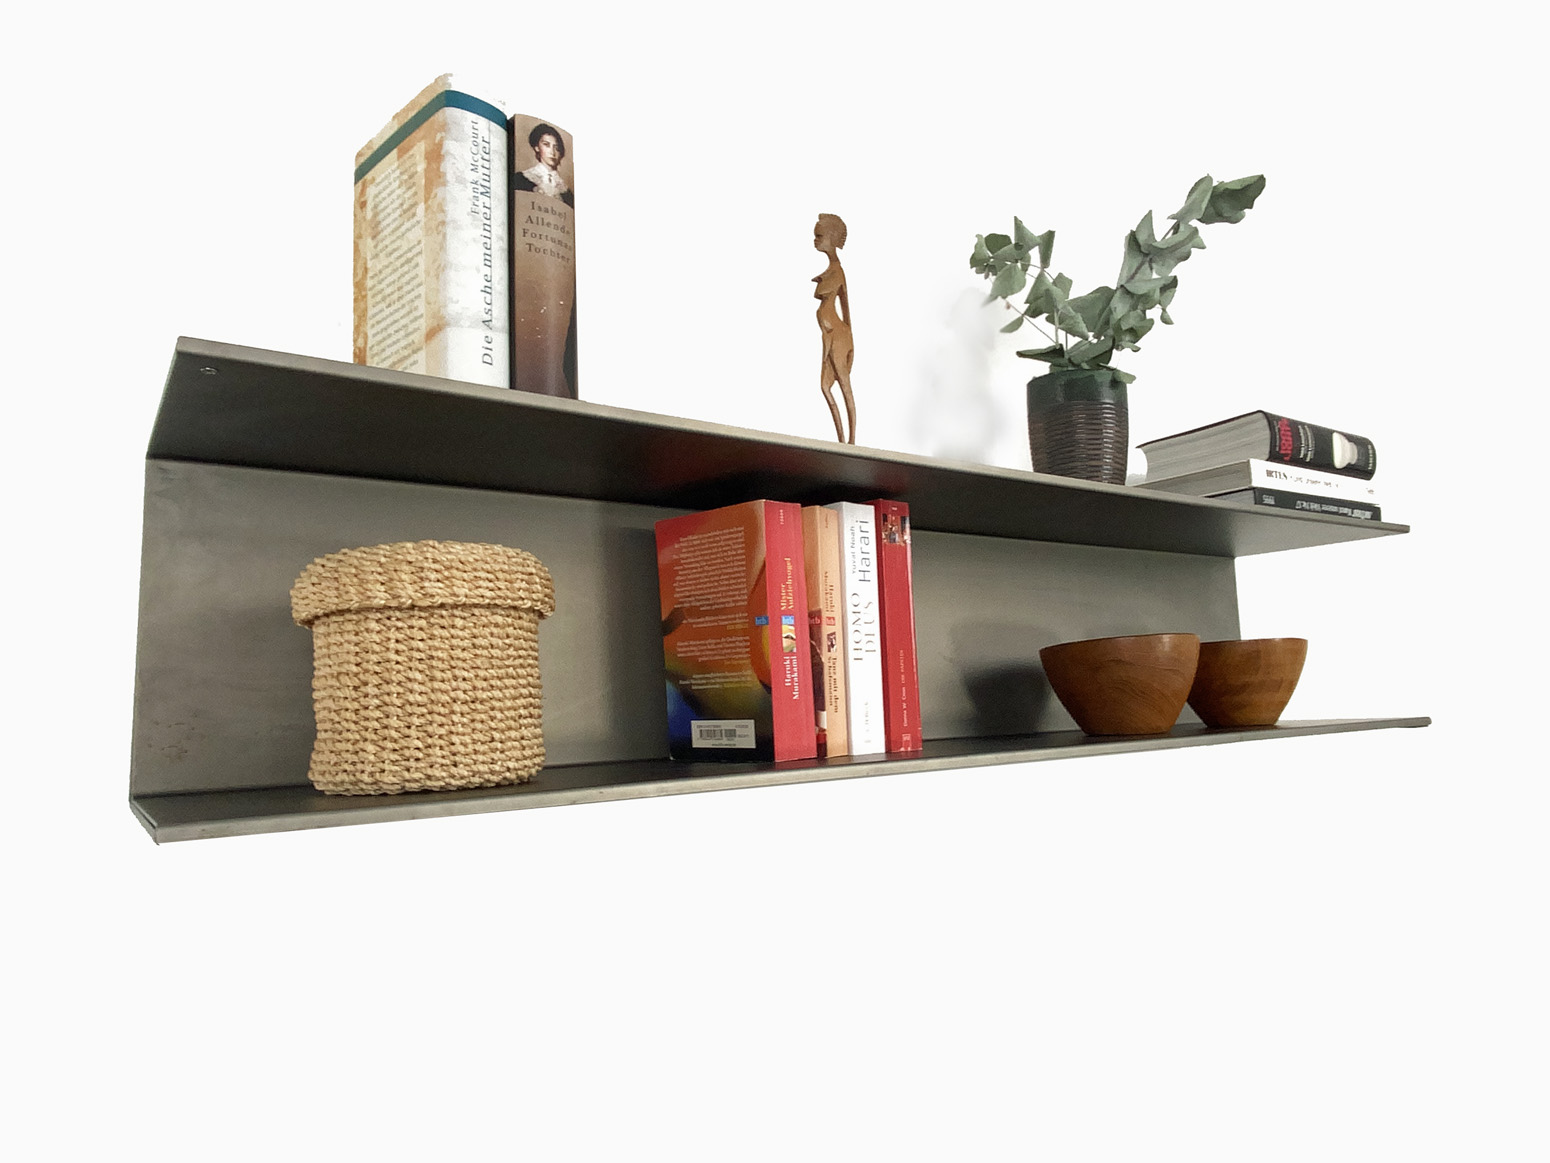 Bookshelf / Wall shelf for by Inga Reichert, made of black untreated crude steel – Industrial Design.